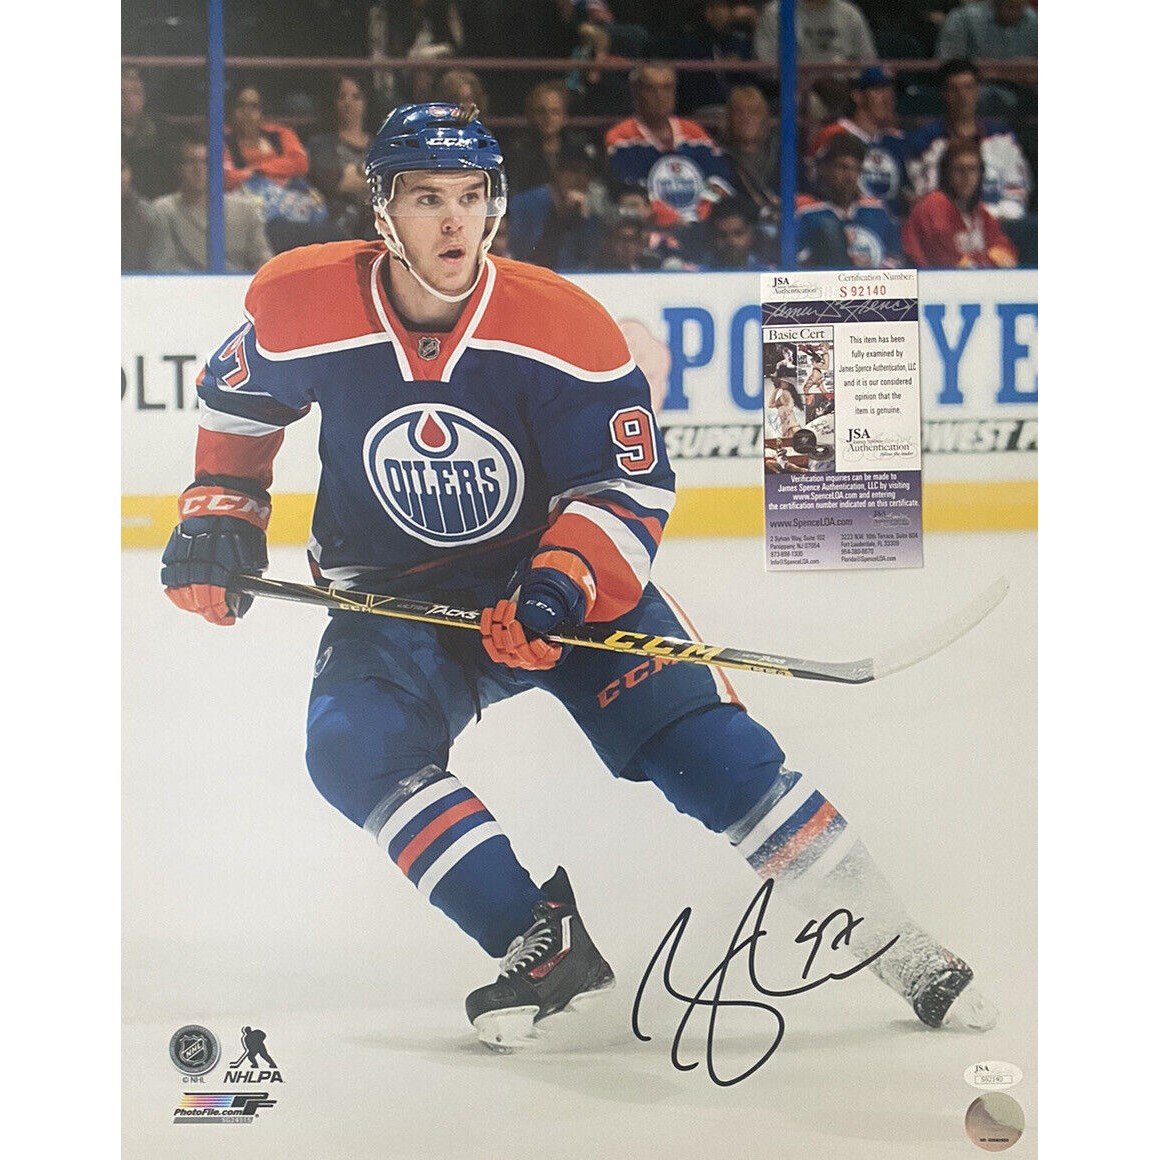 Connor Mcdavid Autographed Signed Auto Edmonton Oilers 16X20 Photograph JSA Certified